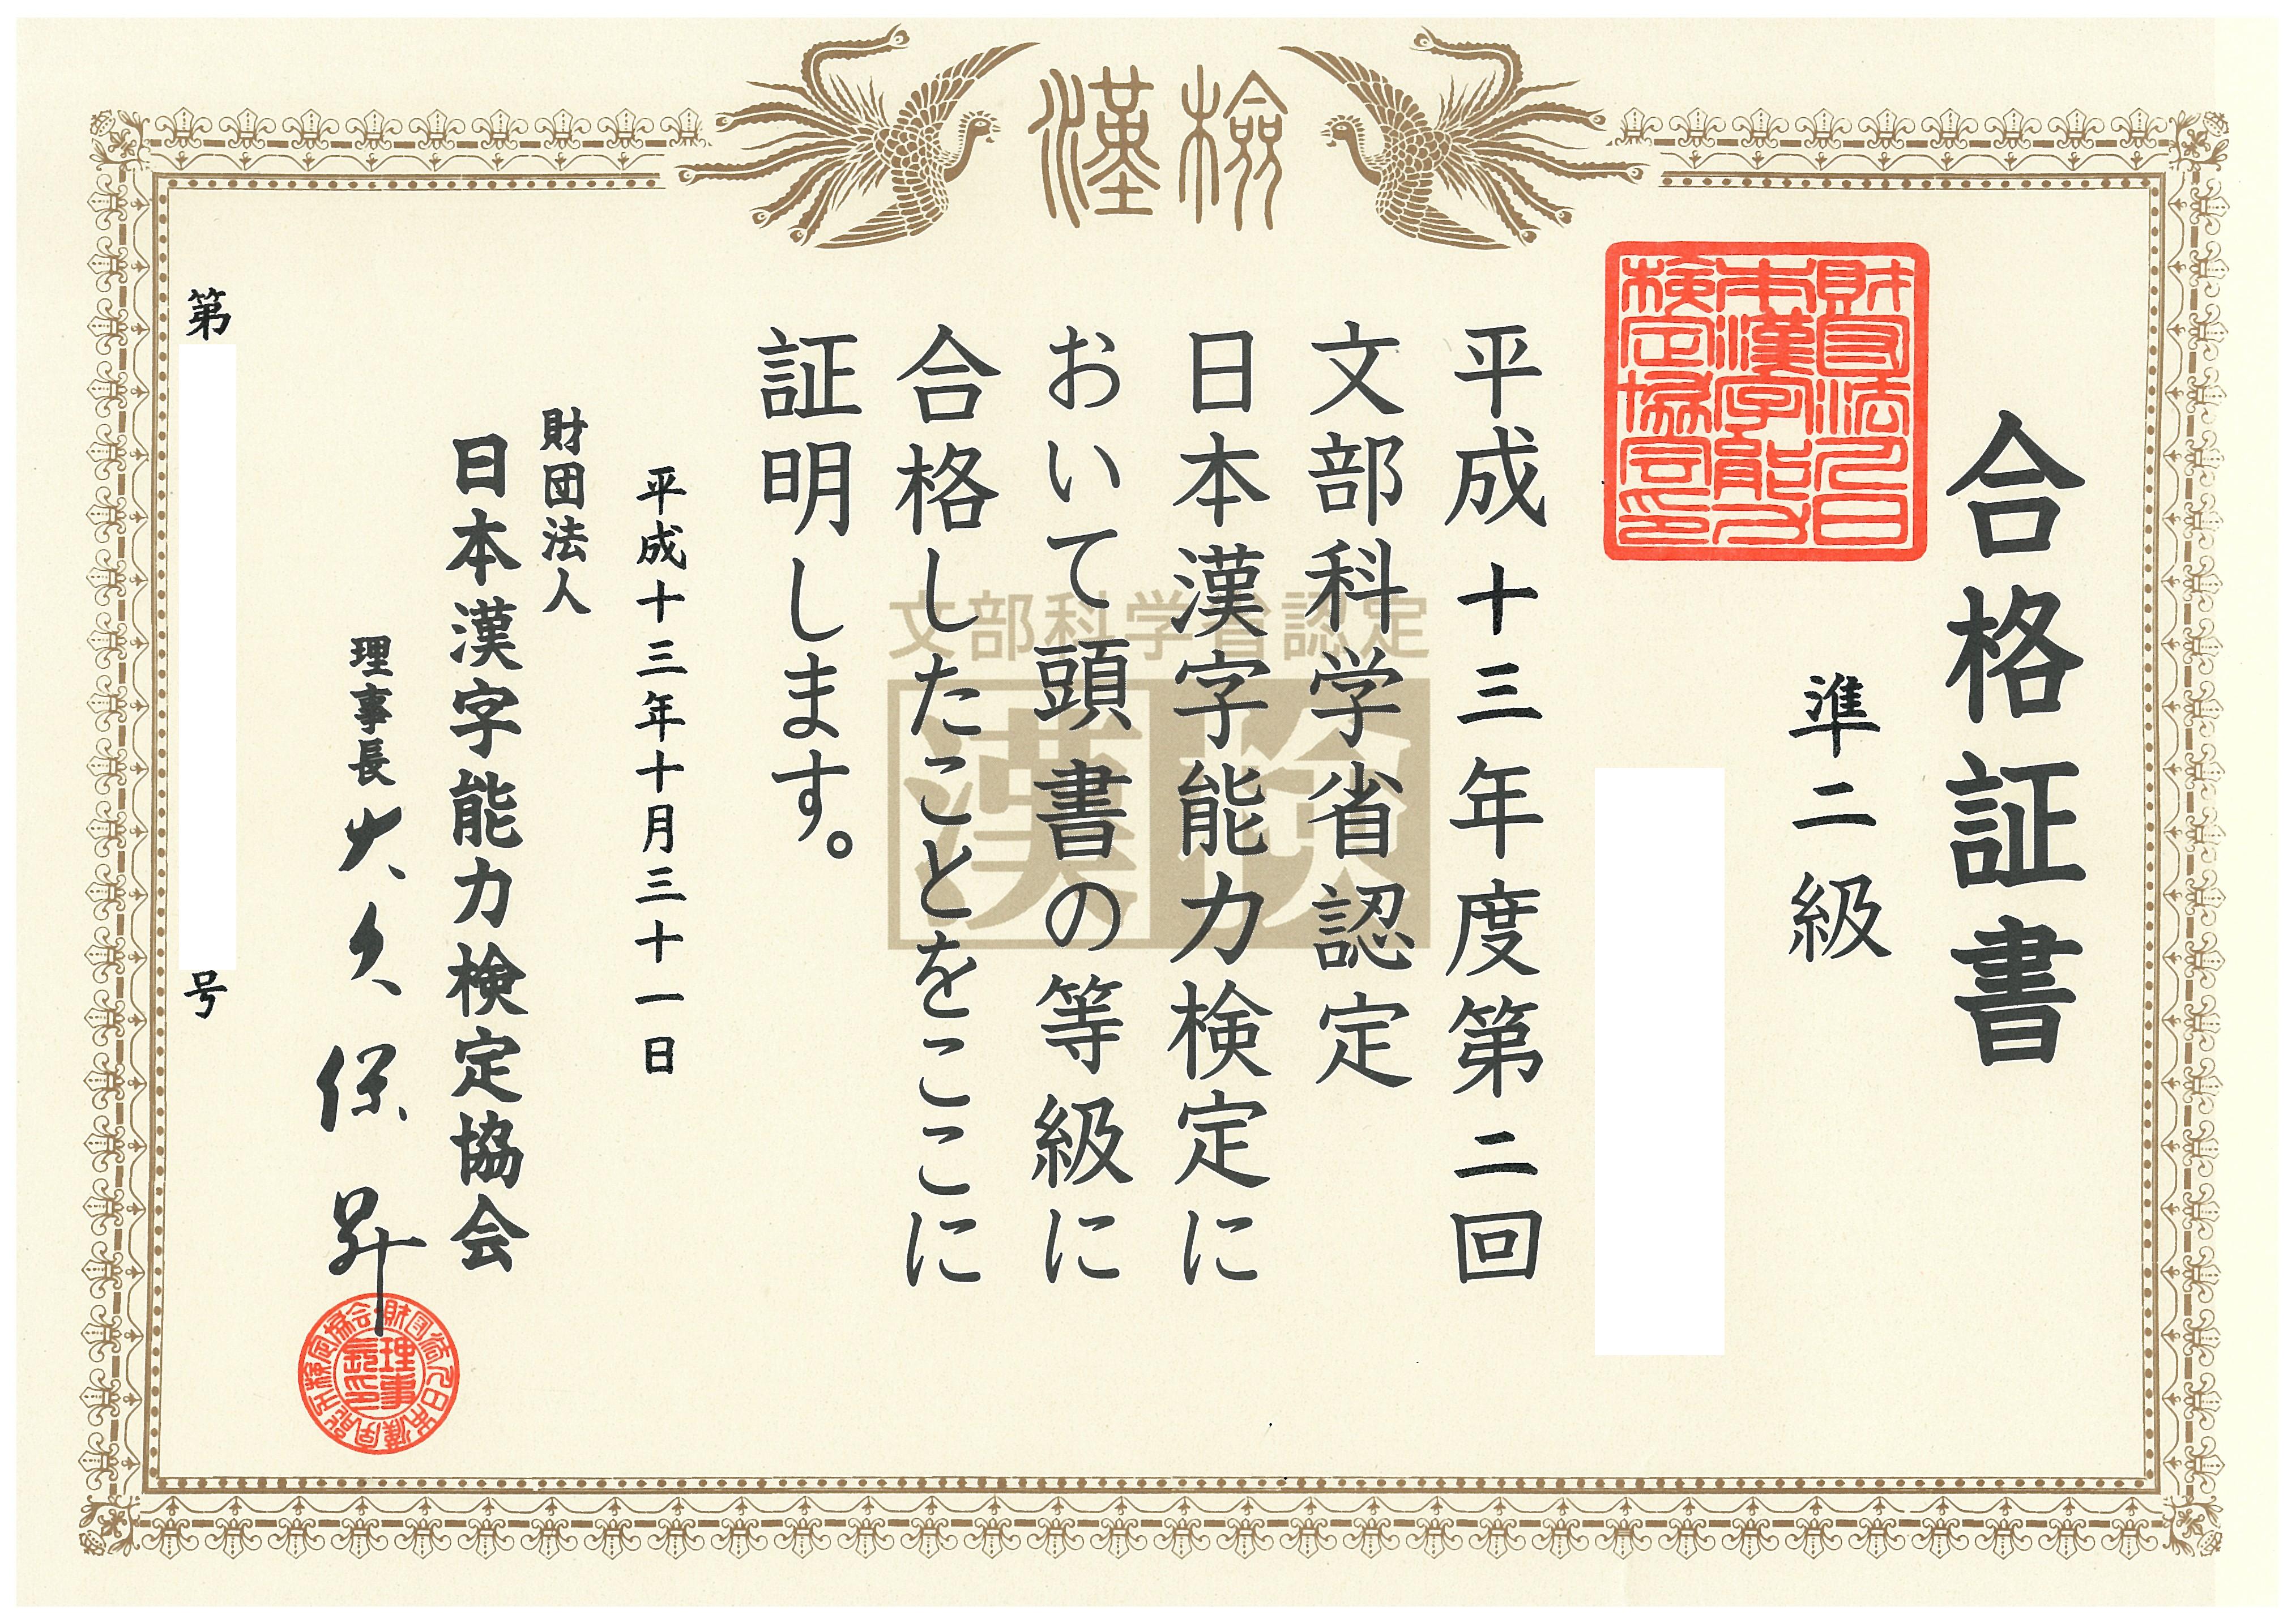 The Certificate of Pre 2nd Kyu in Japanese Kanji Examination